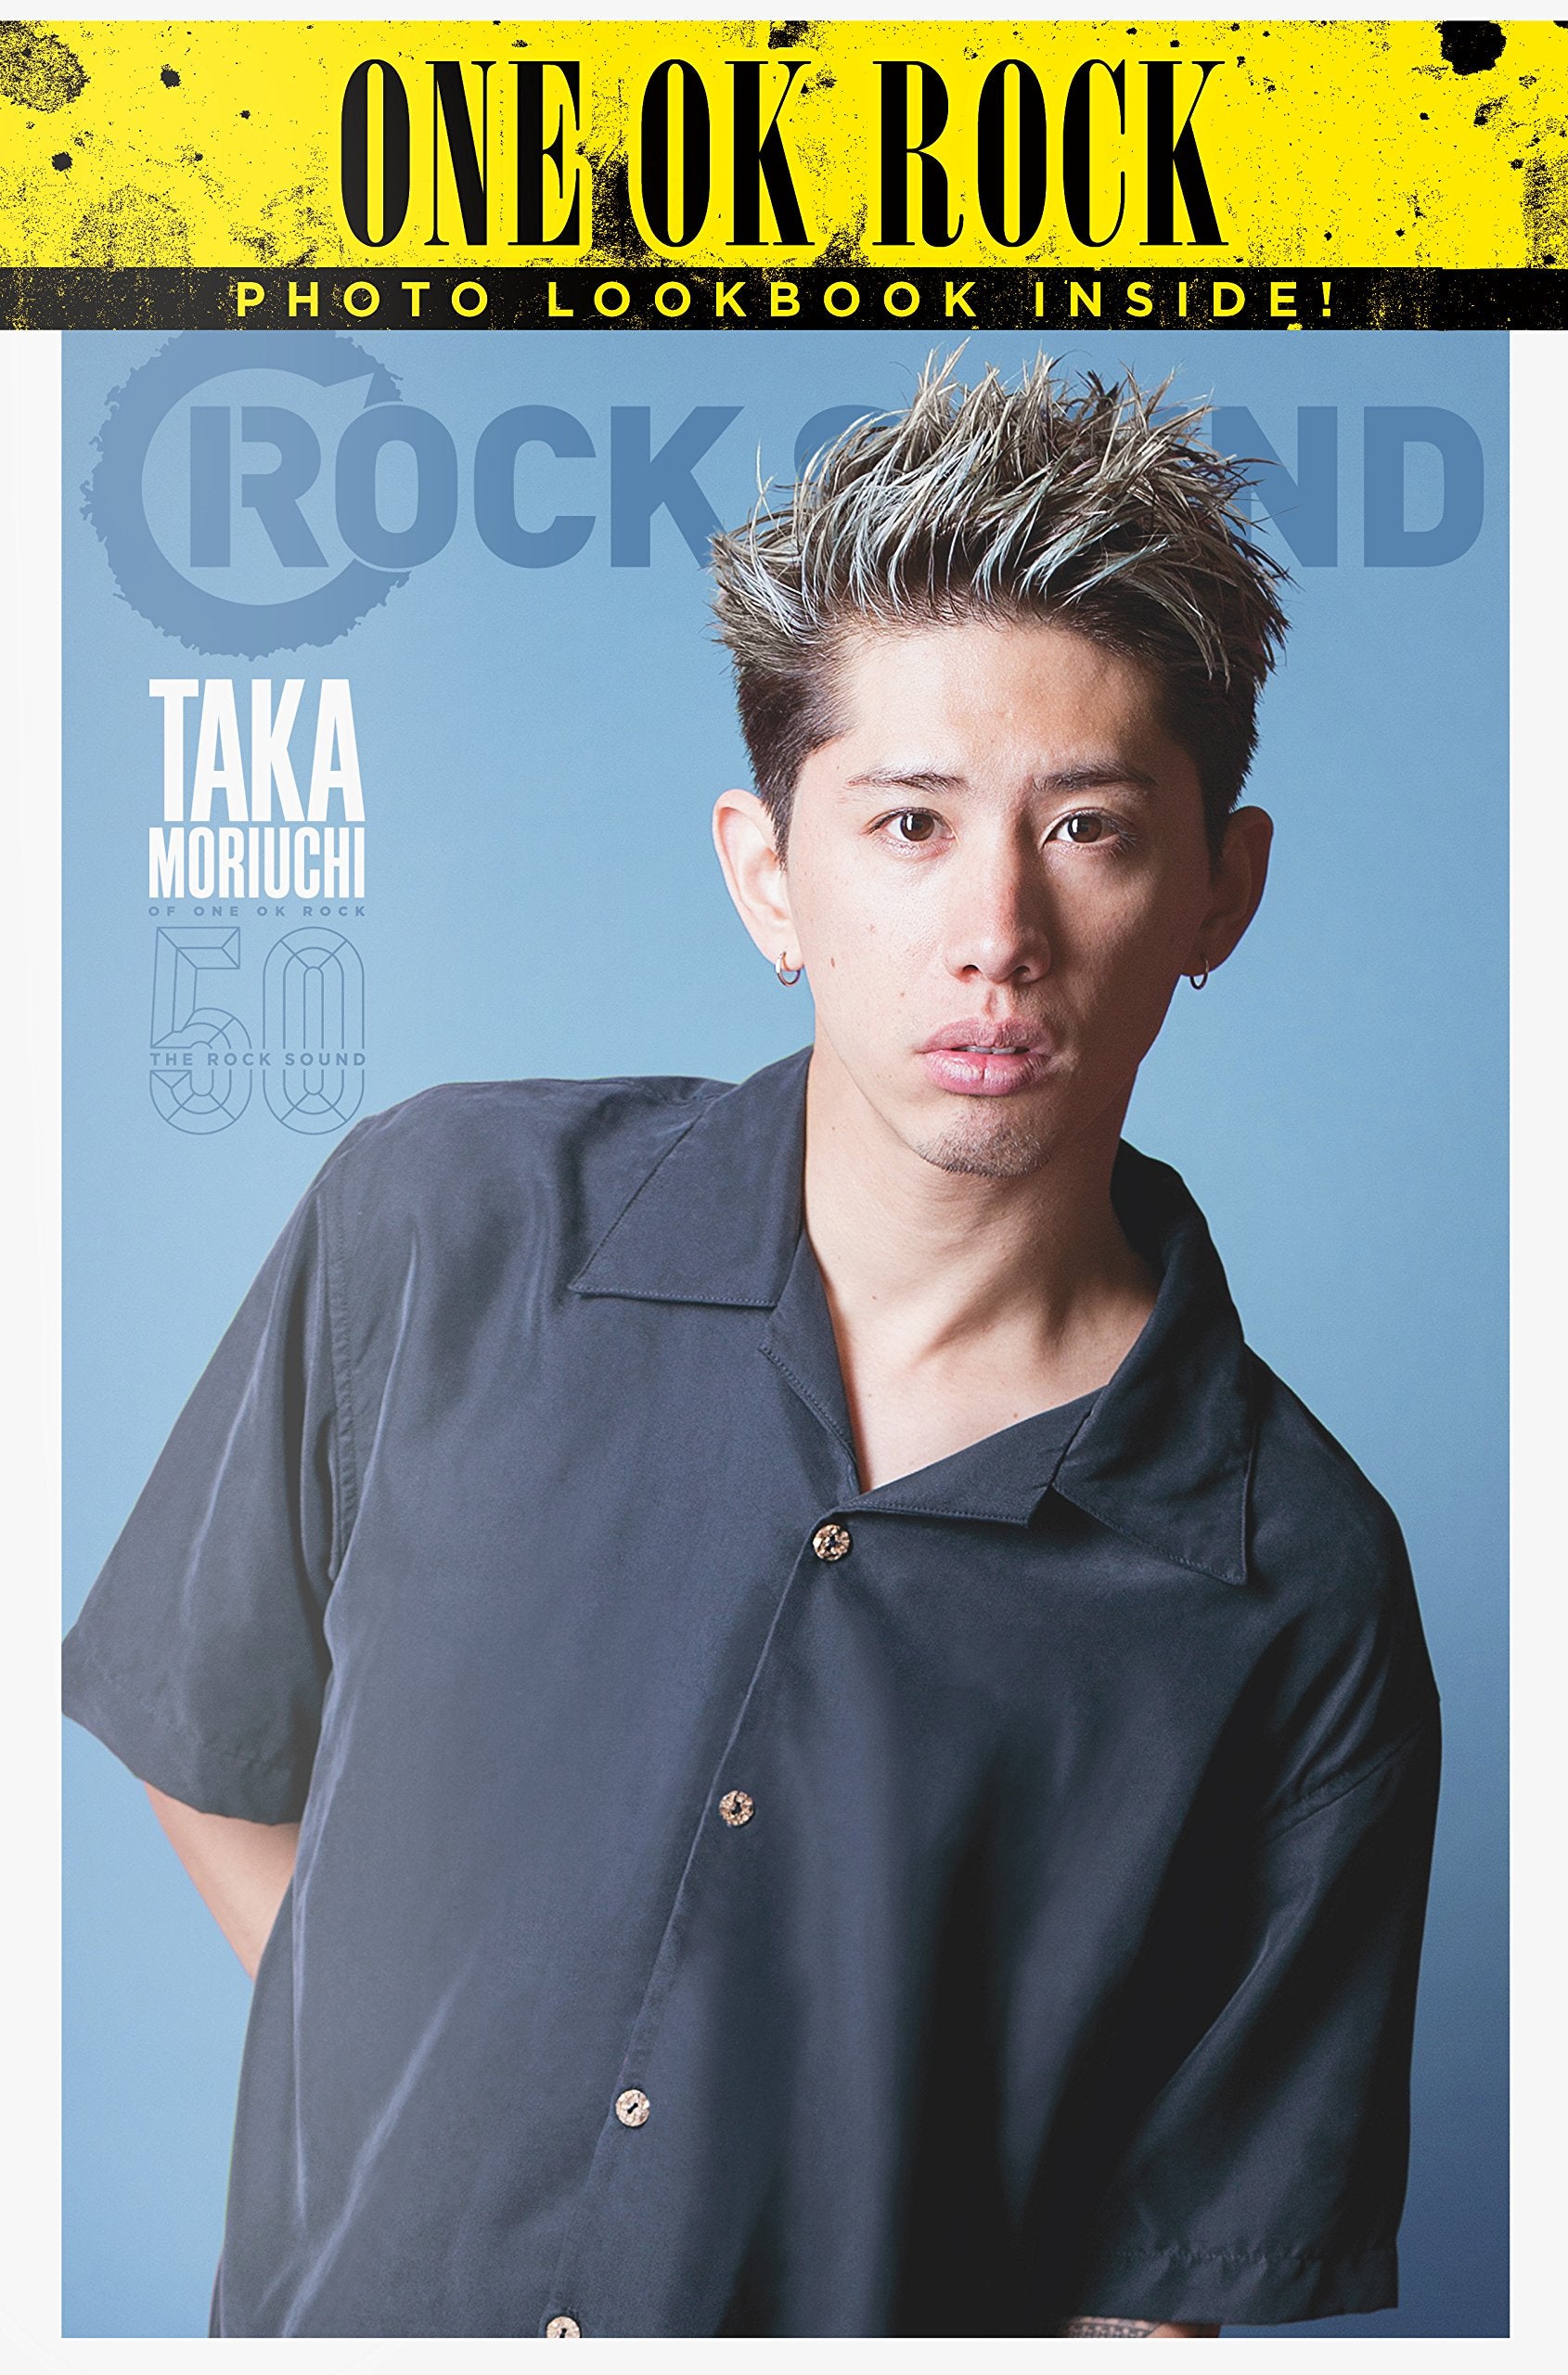 Rock Sound 8月号は 再び One Ok Rock Taka が表紙 Chaosmyth One Ok Rock Fan Blog